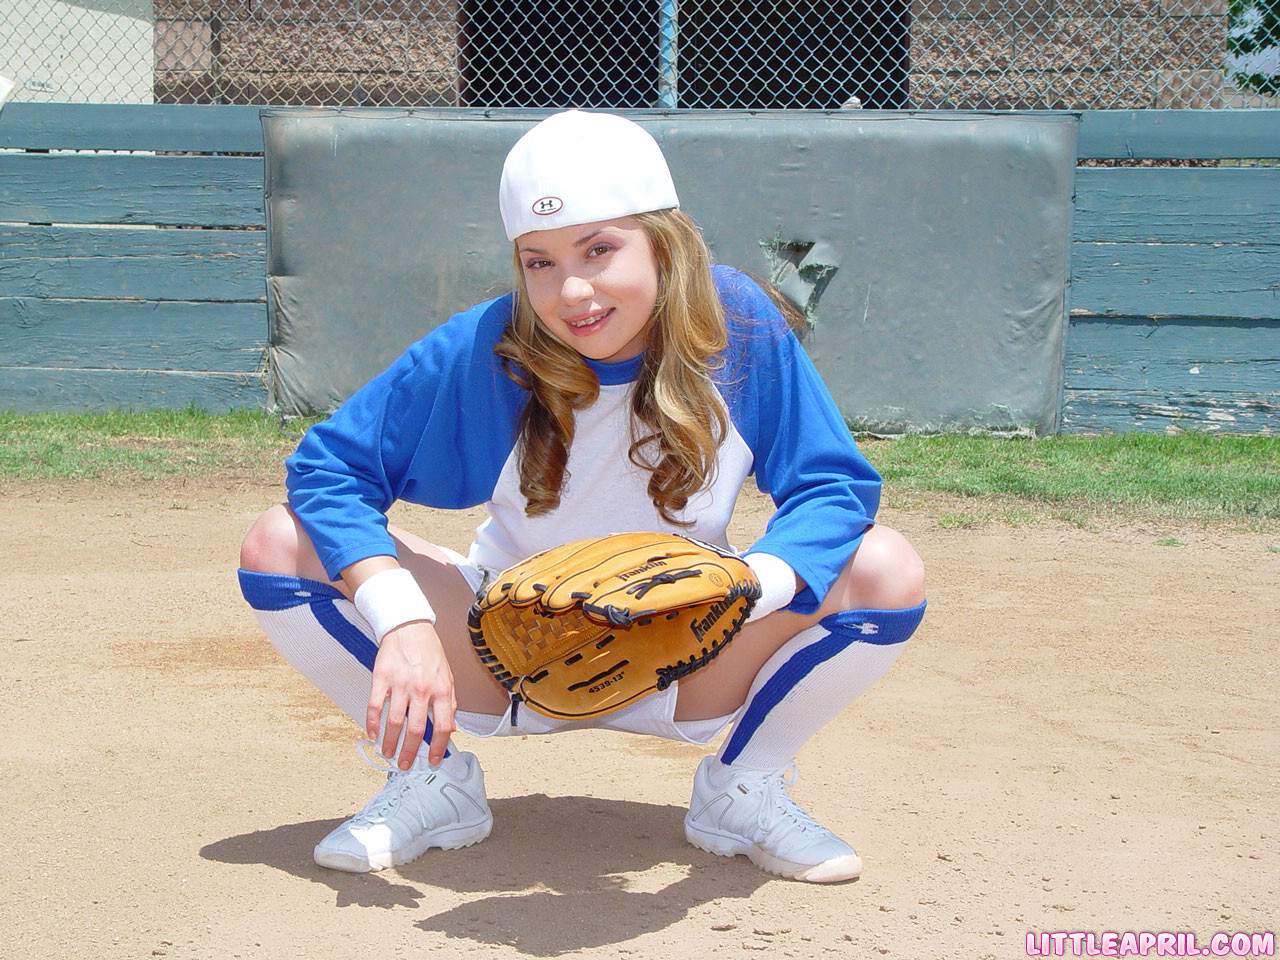 April looking cute in her baseball uniform #67829020